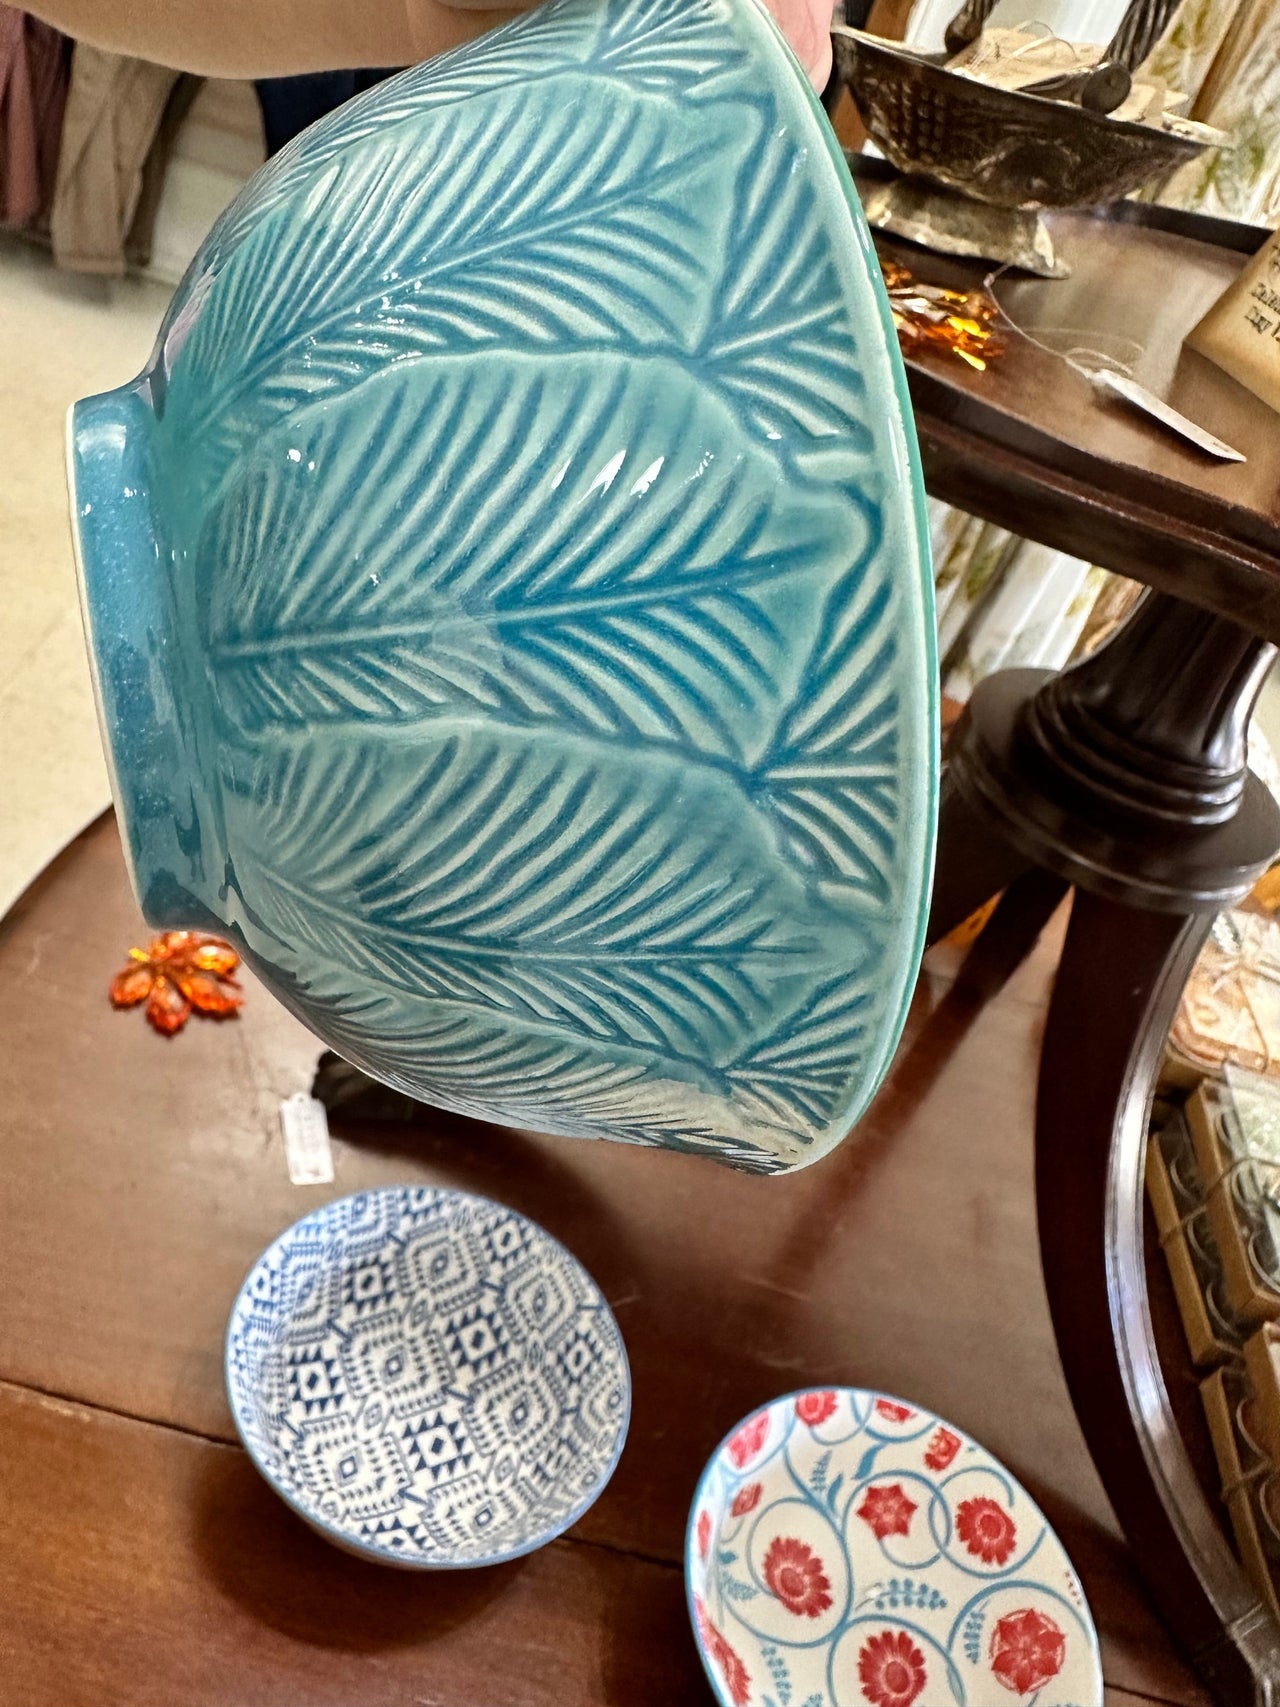 Porcelain Bowls of Art 6” Mattie B's Gifts & Apparel